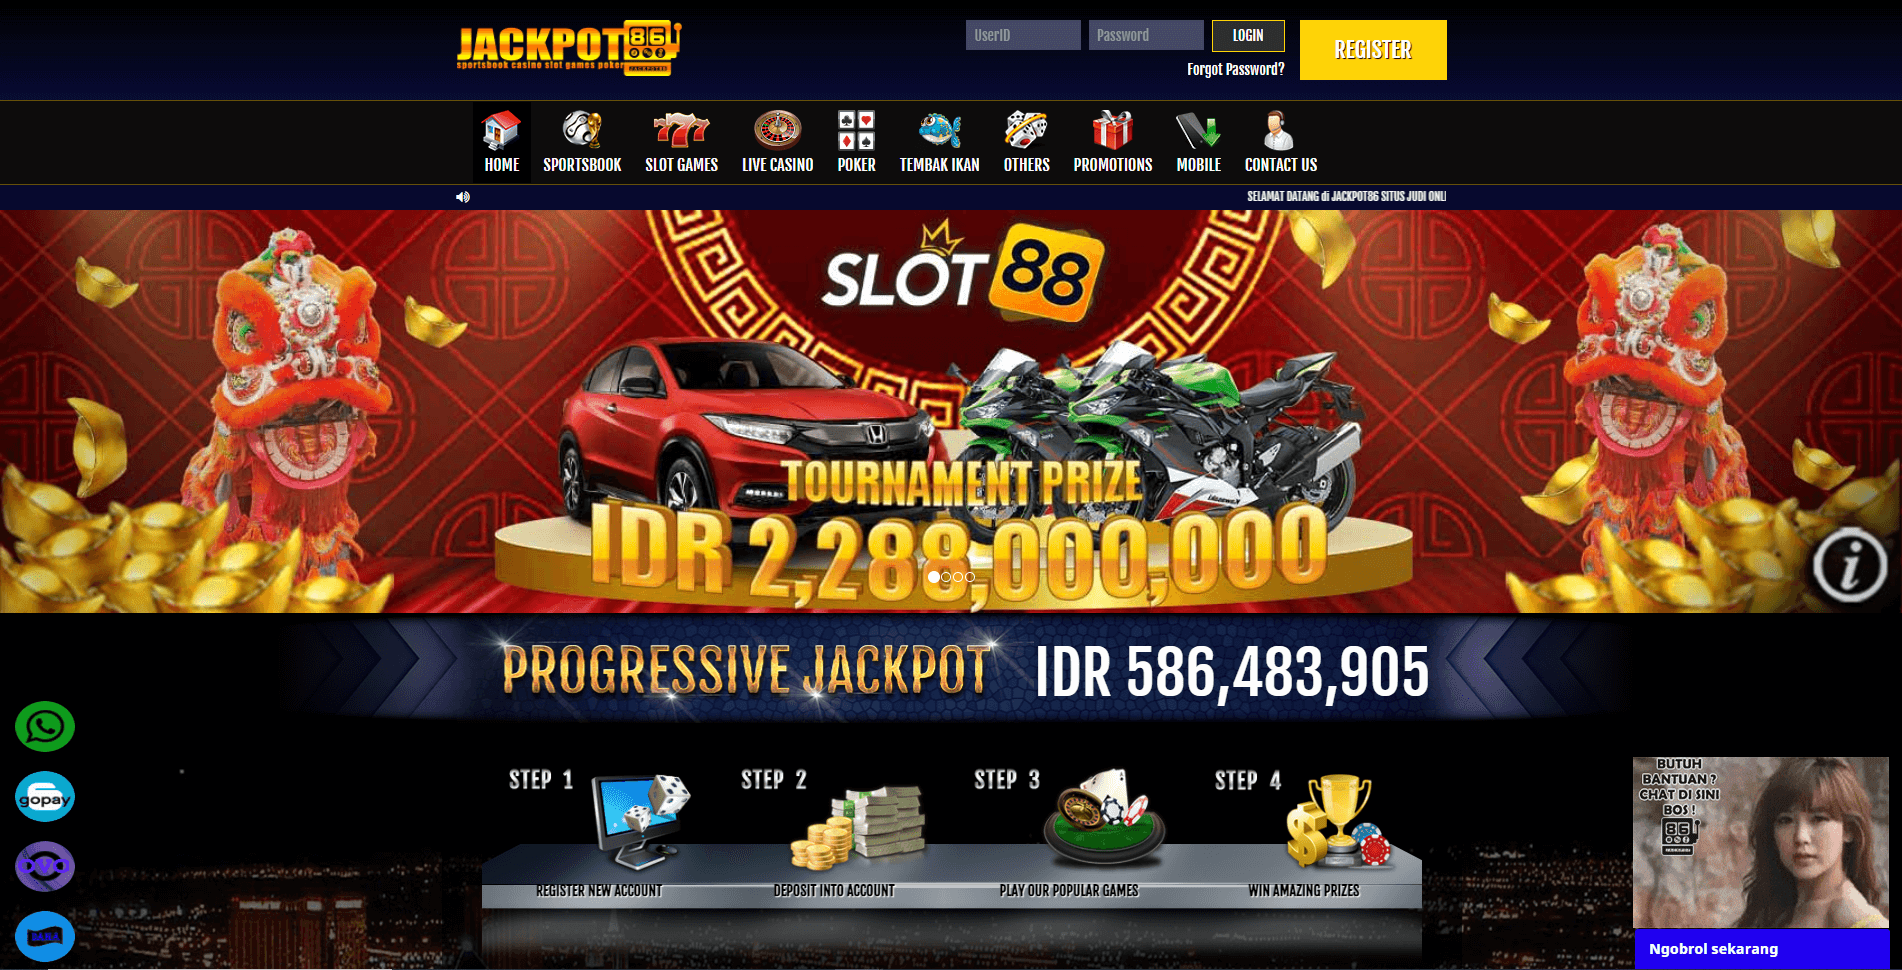 Bonus Turnover Slot JP86